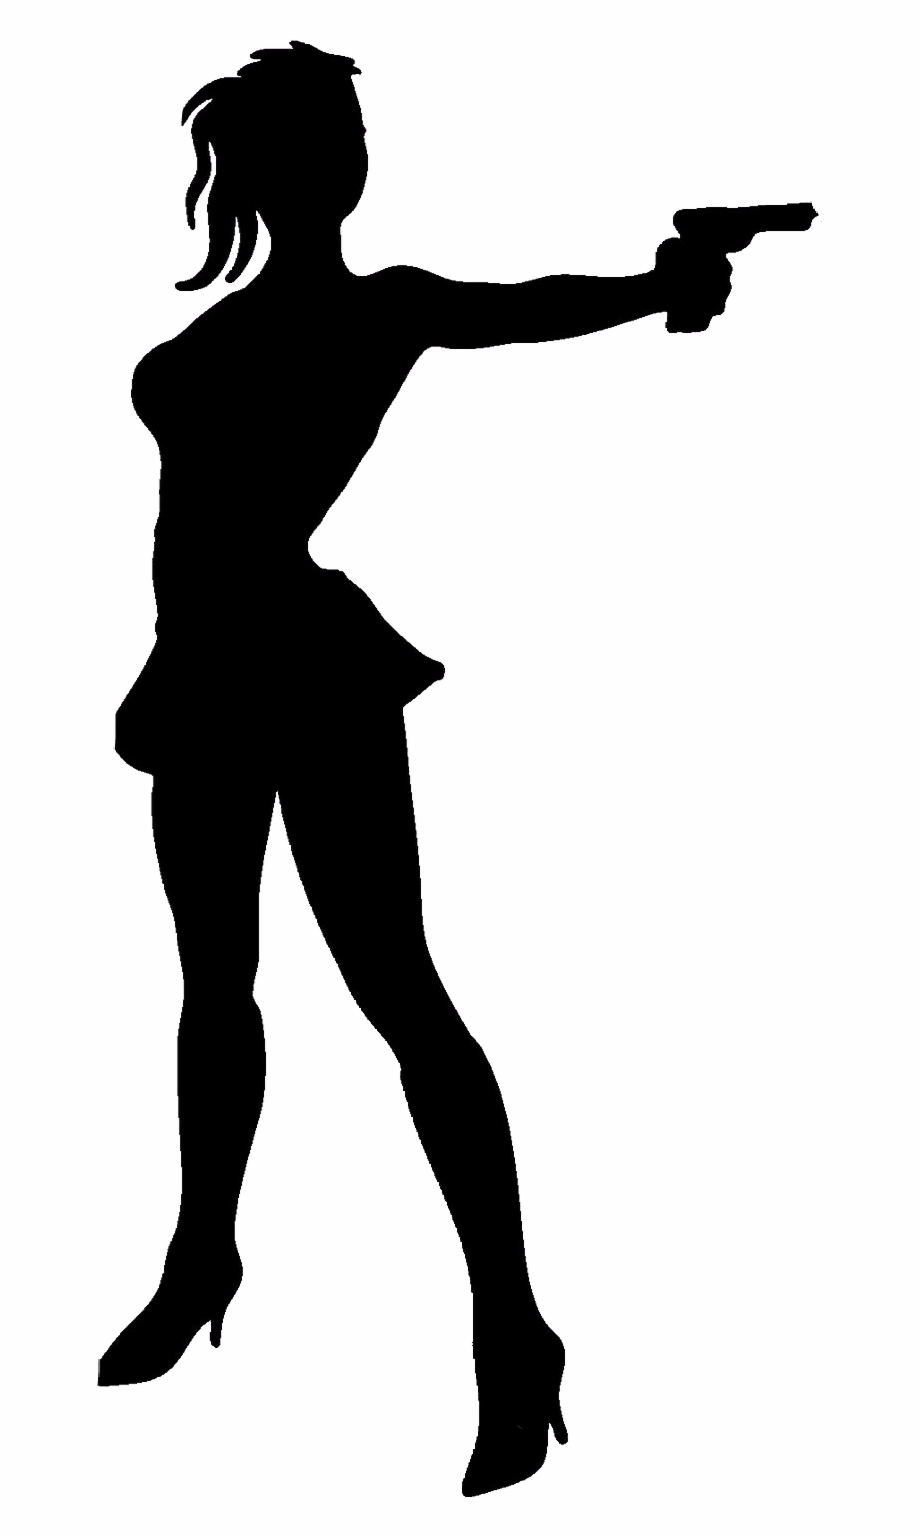 Woman Silhouette Pistol Sexy Girl Silhouette With Gun